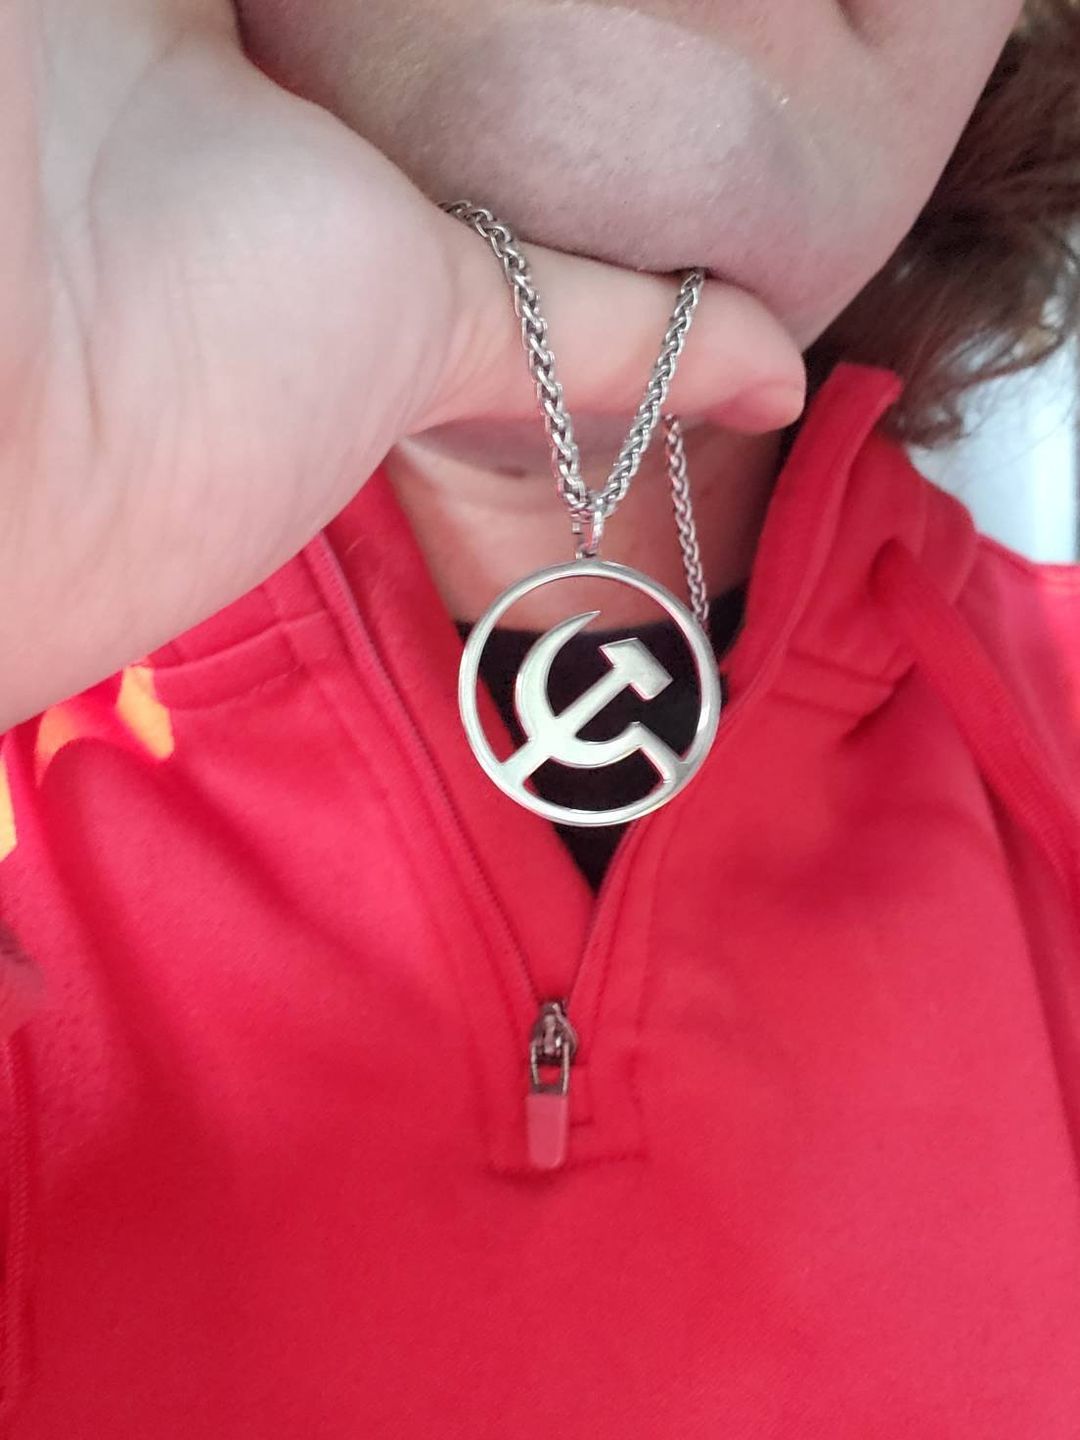 Tom review of Communism Symbol Necklace
